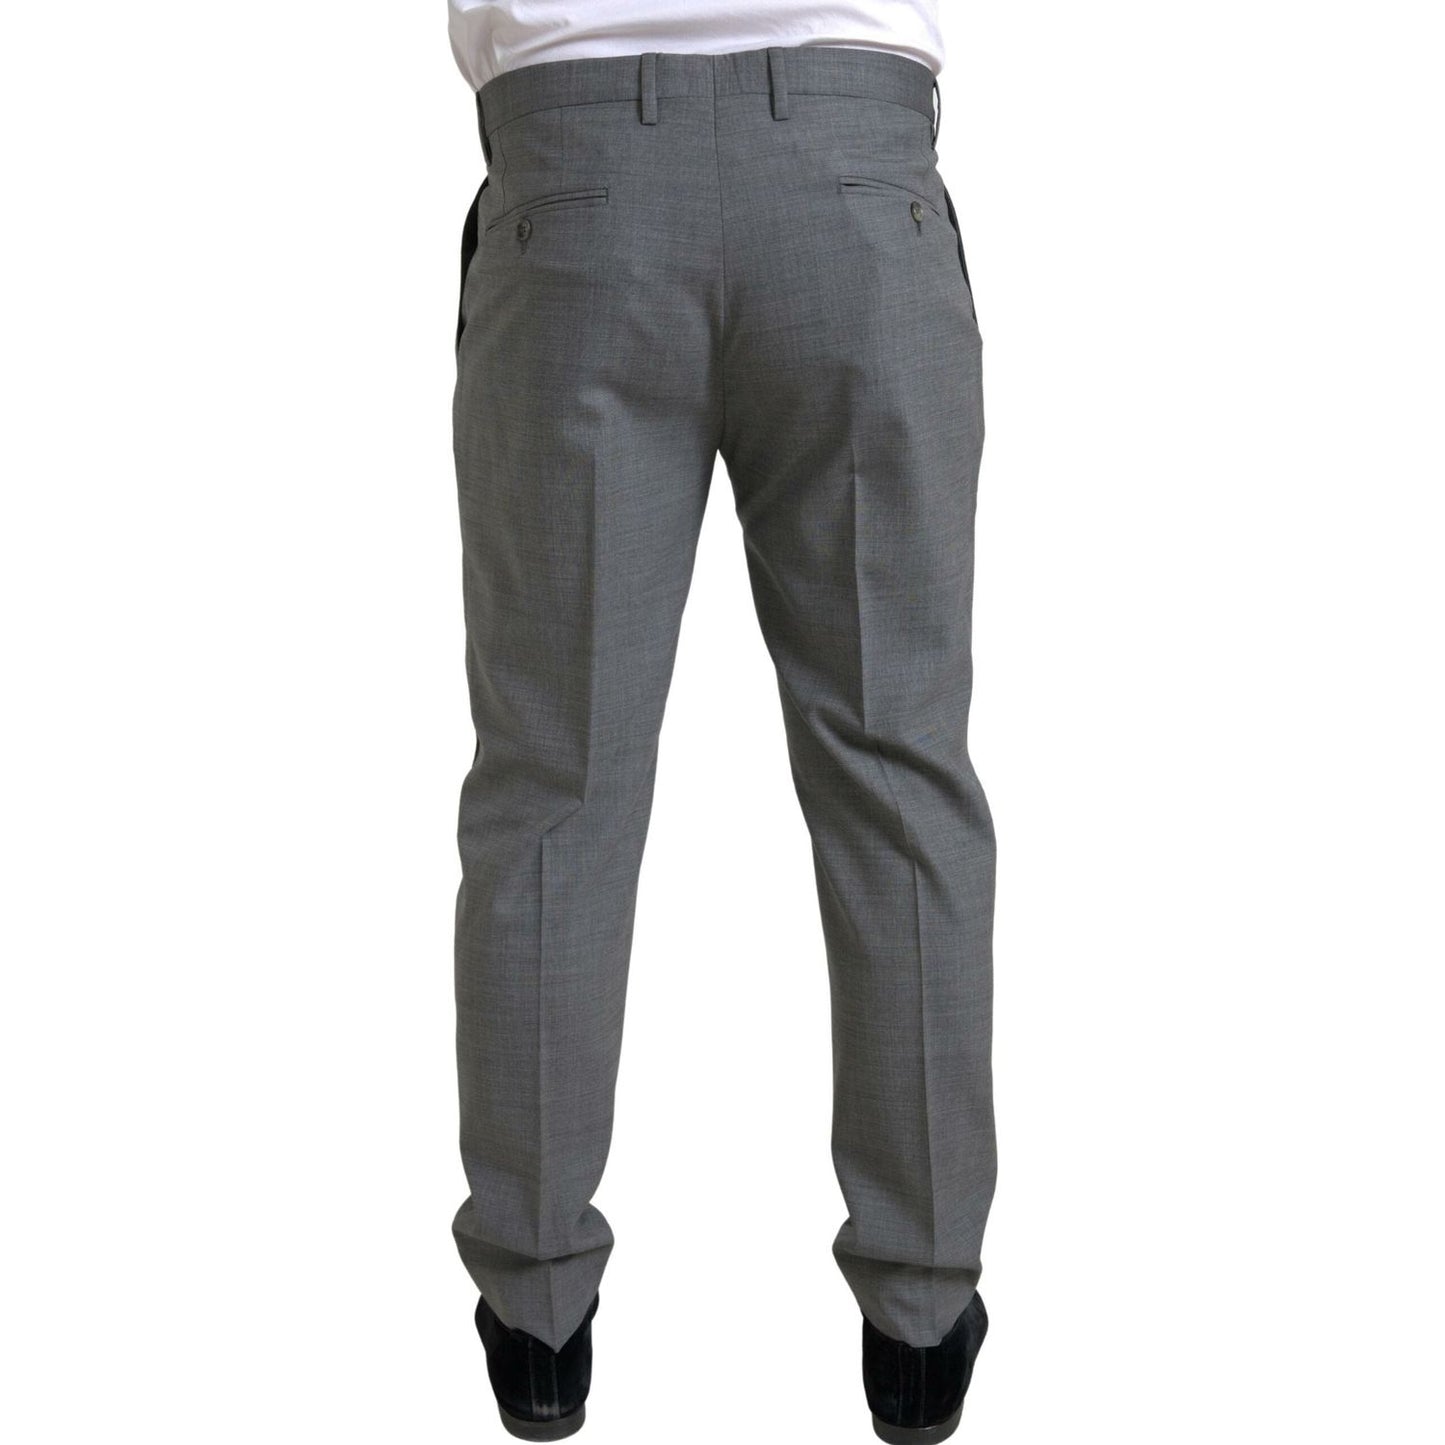 Dolce & Gabbana Elegant Skinny Wool Dress Pants in Grey gray-wool-chino-skinny-men-dress-trouser-pants